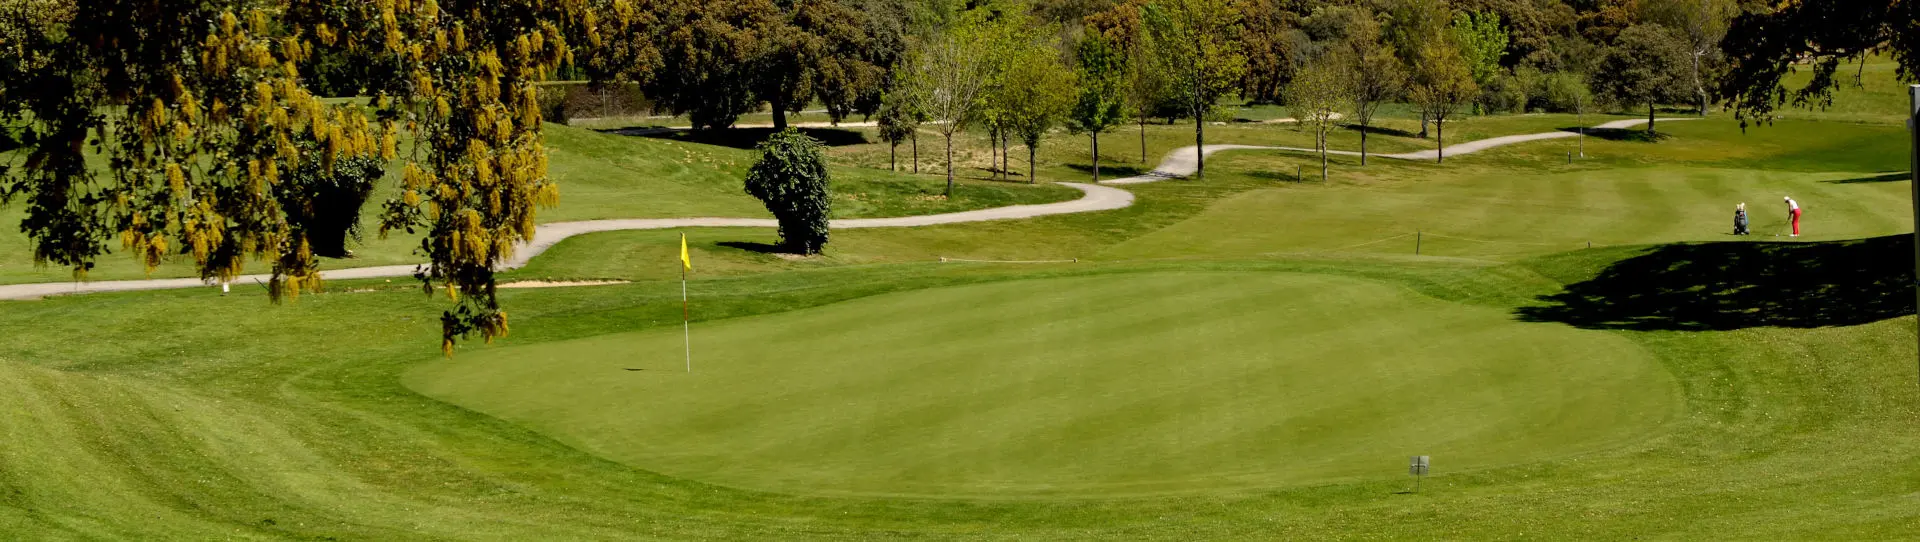 Spain golf courses - Jarama R.A.C.E. Golf Course - Photo 1